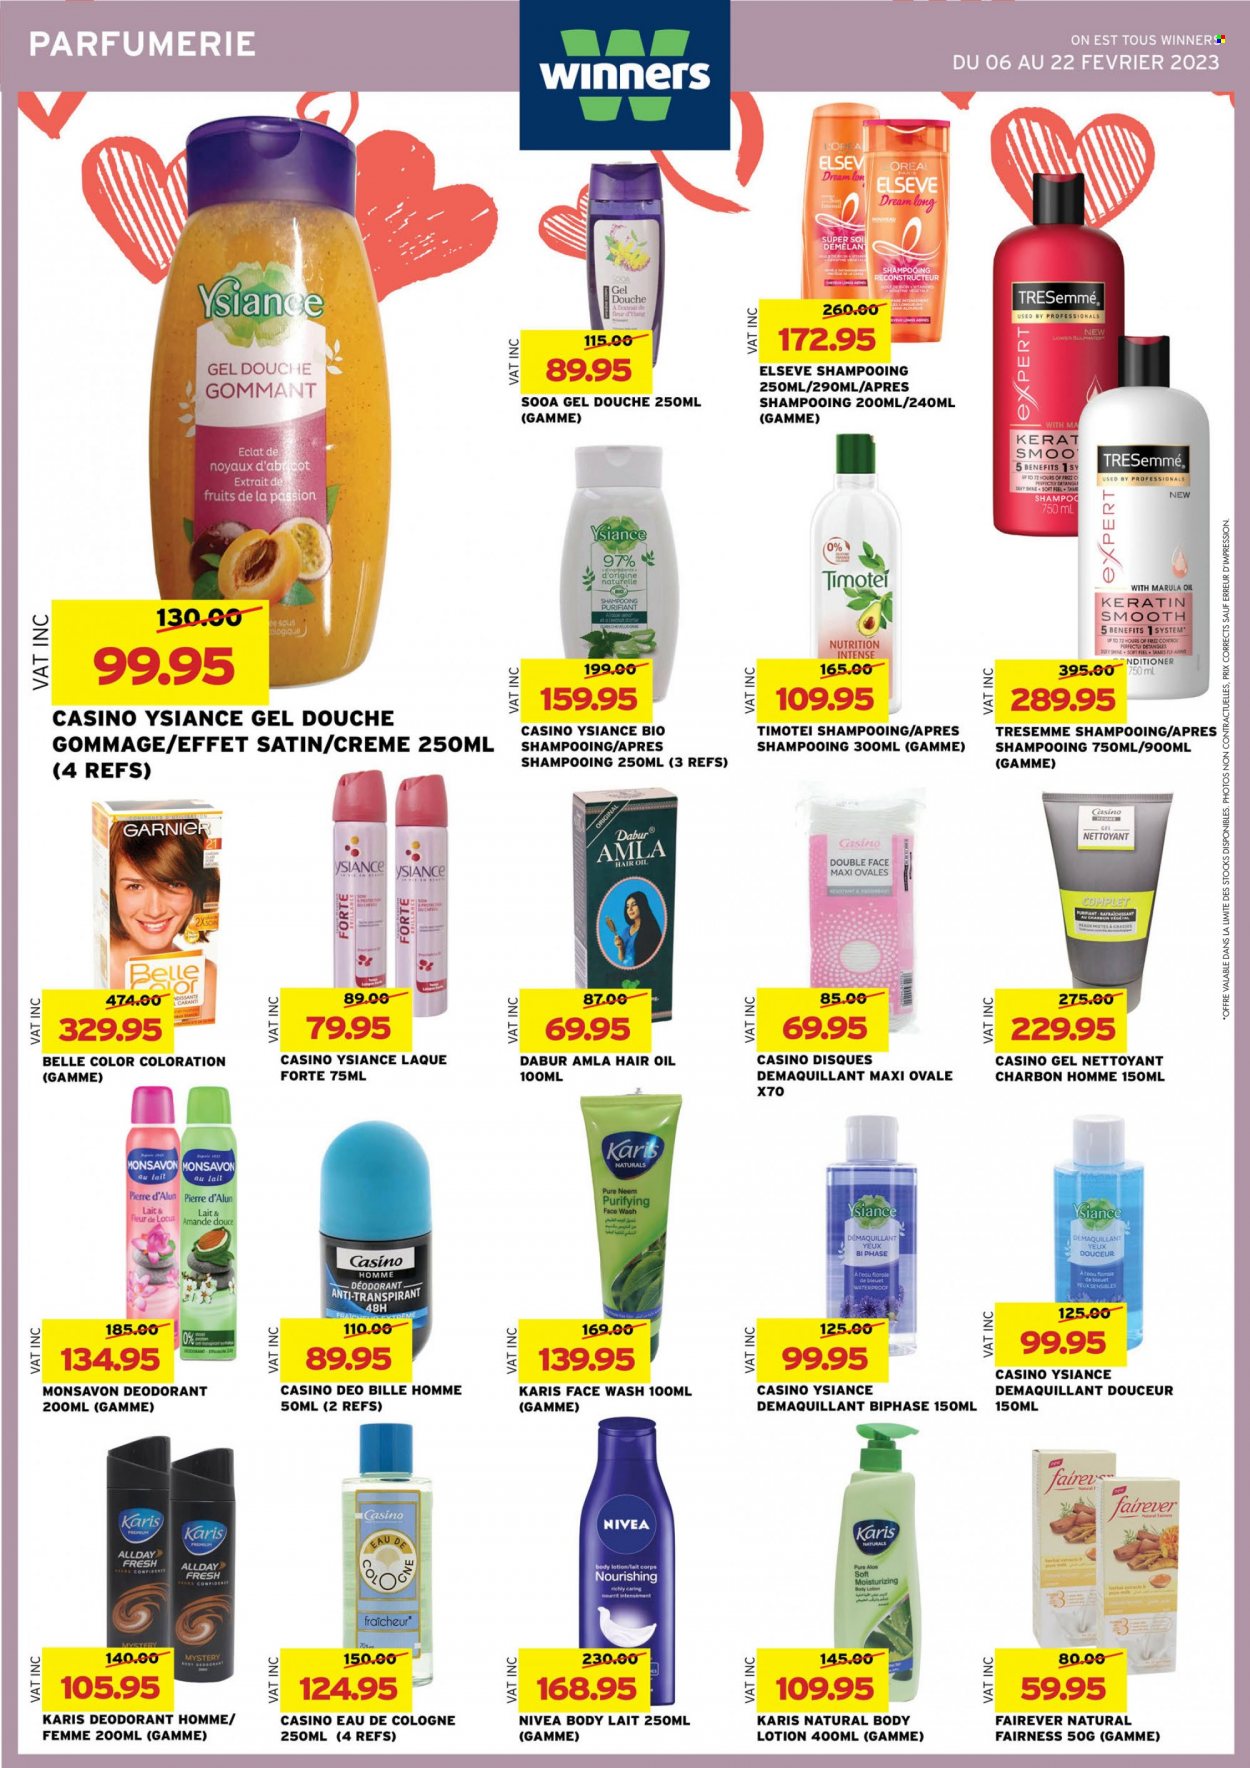 thumbnail - Winner's Catalogue - 6.02.2023 - 22.02.2023 - Sales products - hake, Dabur, Nivea, face gel, face wash, TRESemmé, hair oil, keratin, body lotion, anti-perspirant, Eclat, cologne, Lotus, Garnier, shampoo, deodorant. Page 20.